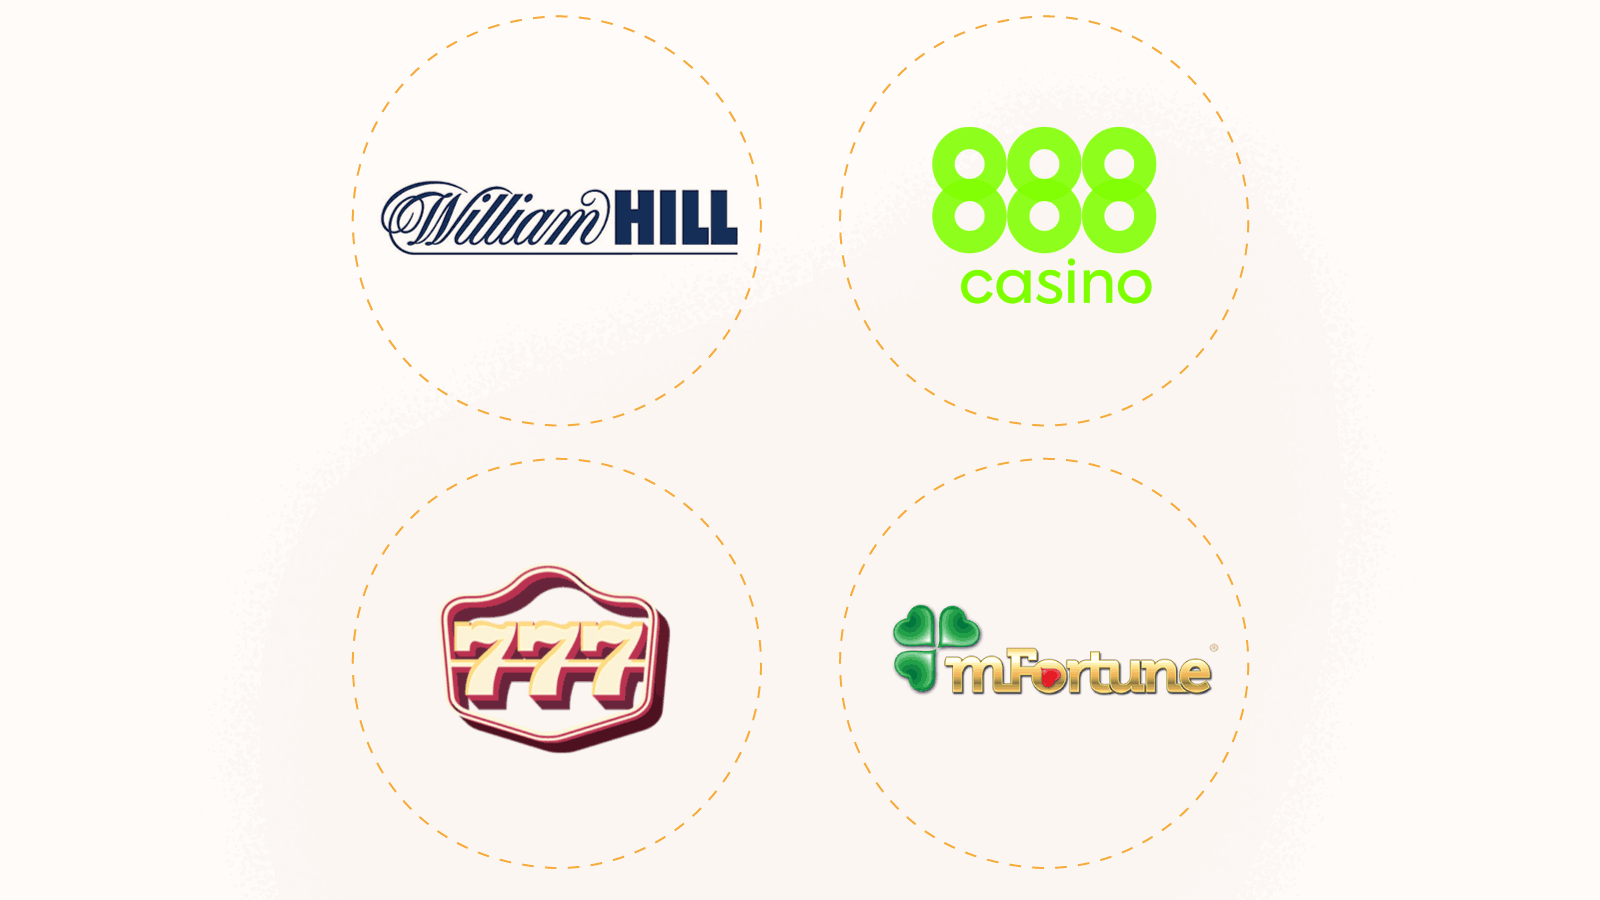 Our picks for best online casino no deposit